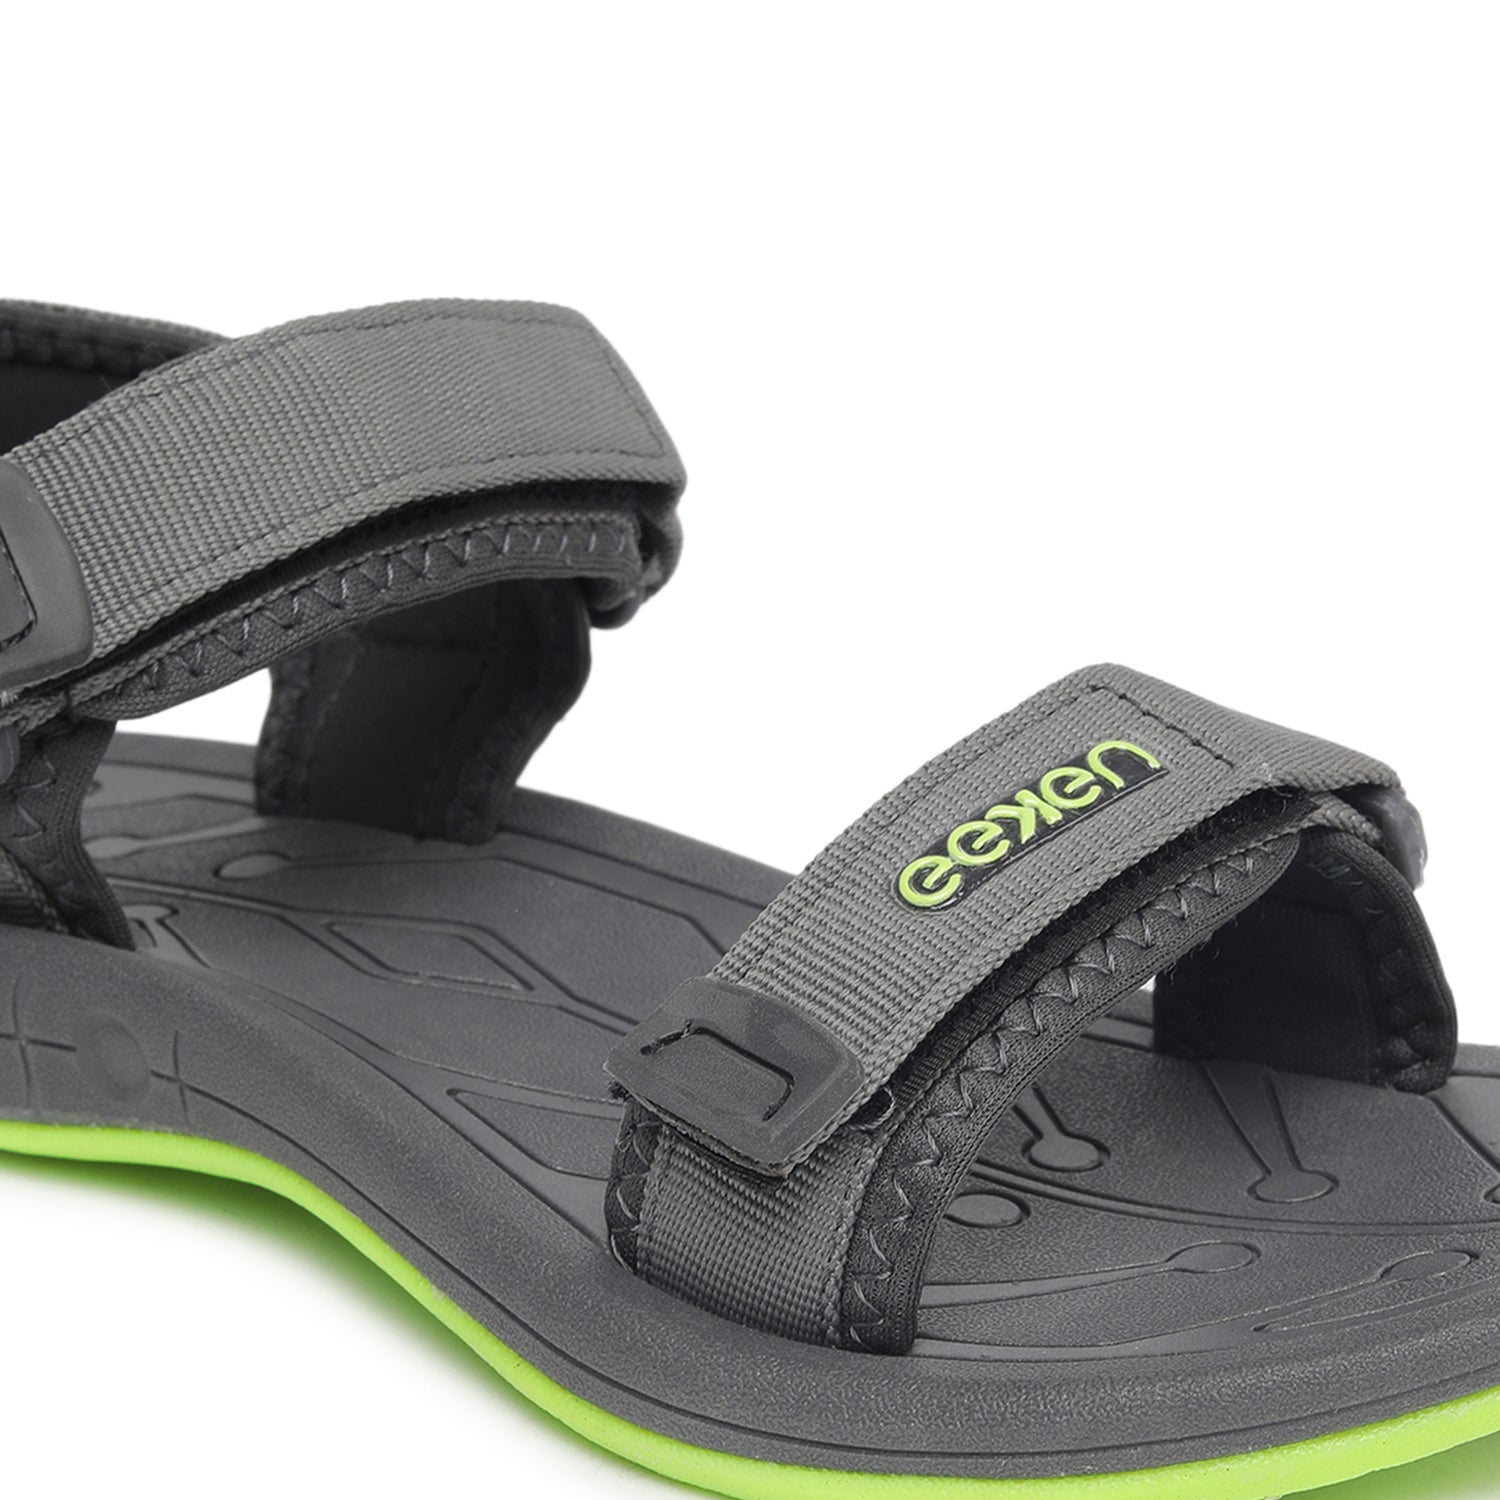 Eeken ESDG1009 Grey And Fluorescent Green Stylish Casual Outdoor Sandals For Men